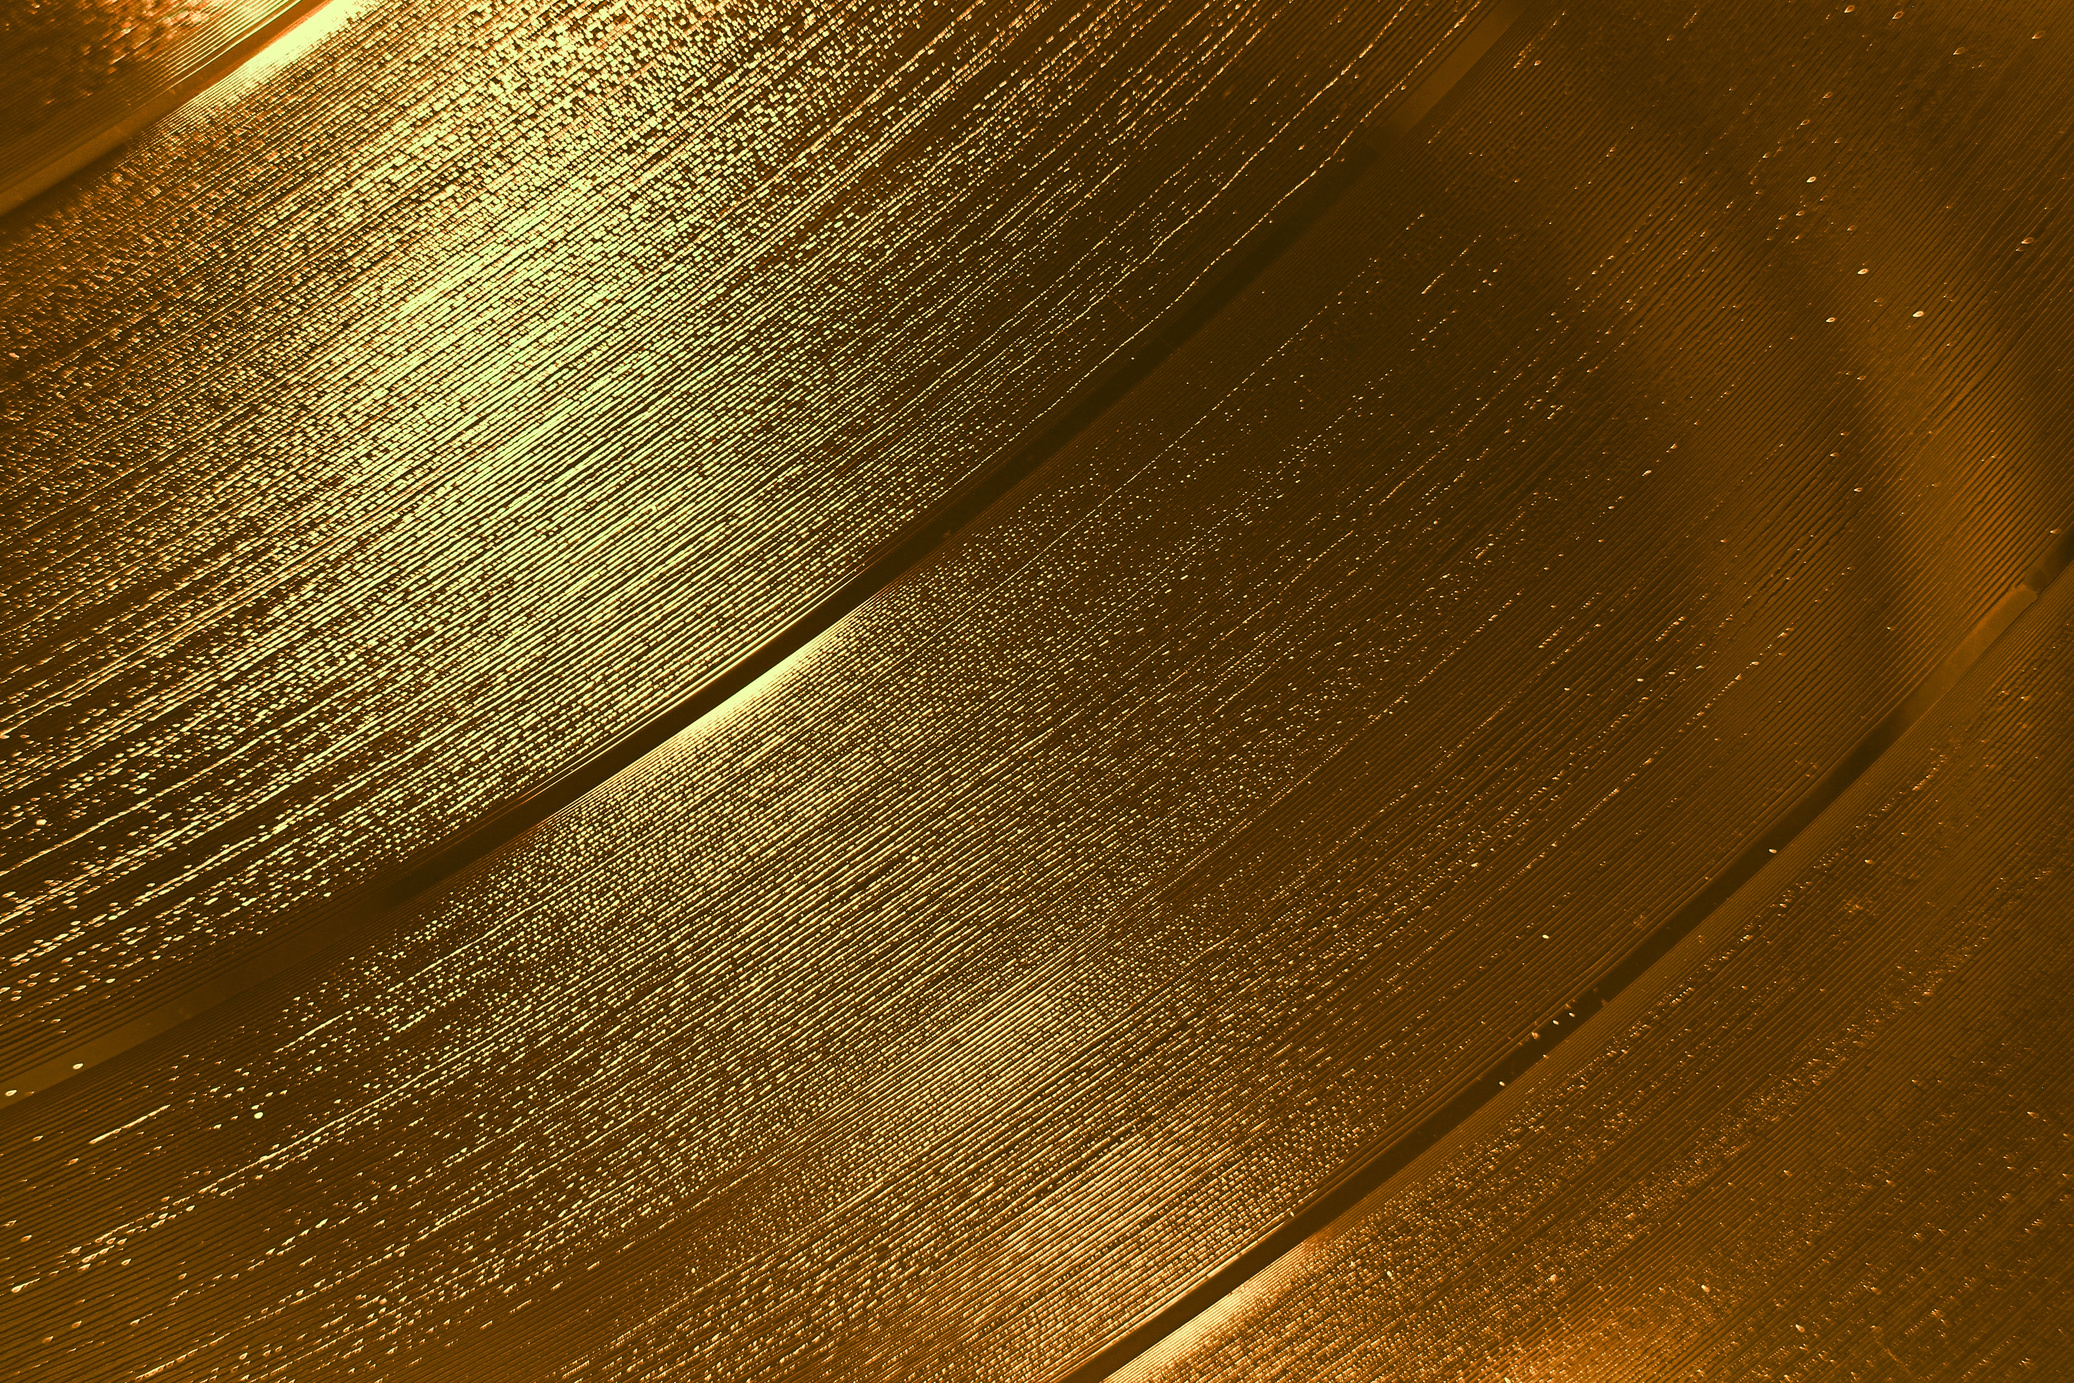 Metallic gold shiny vinyl record background textures